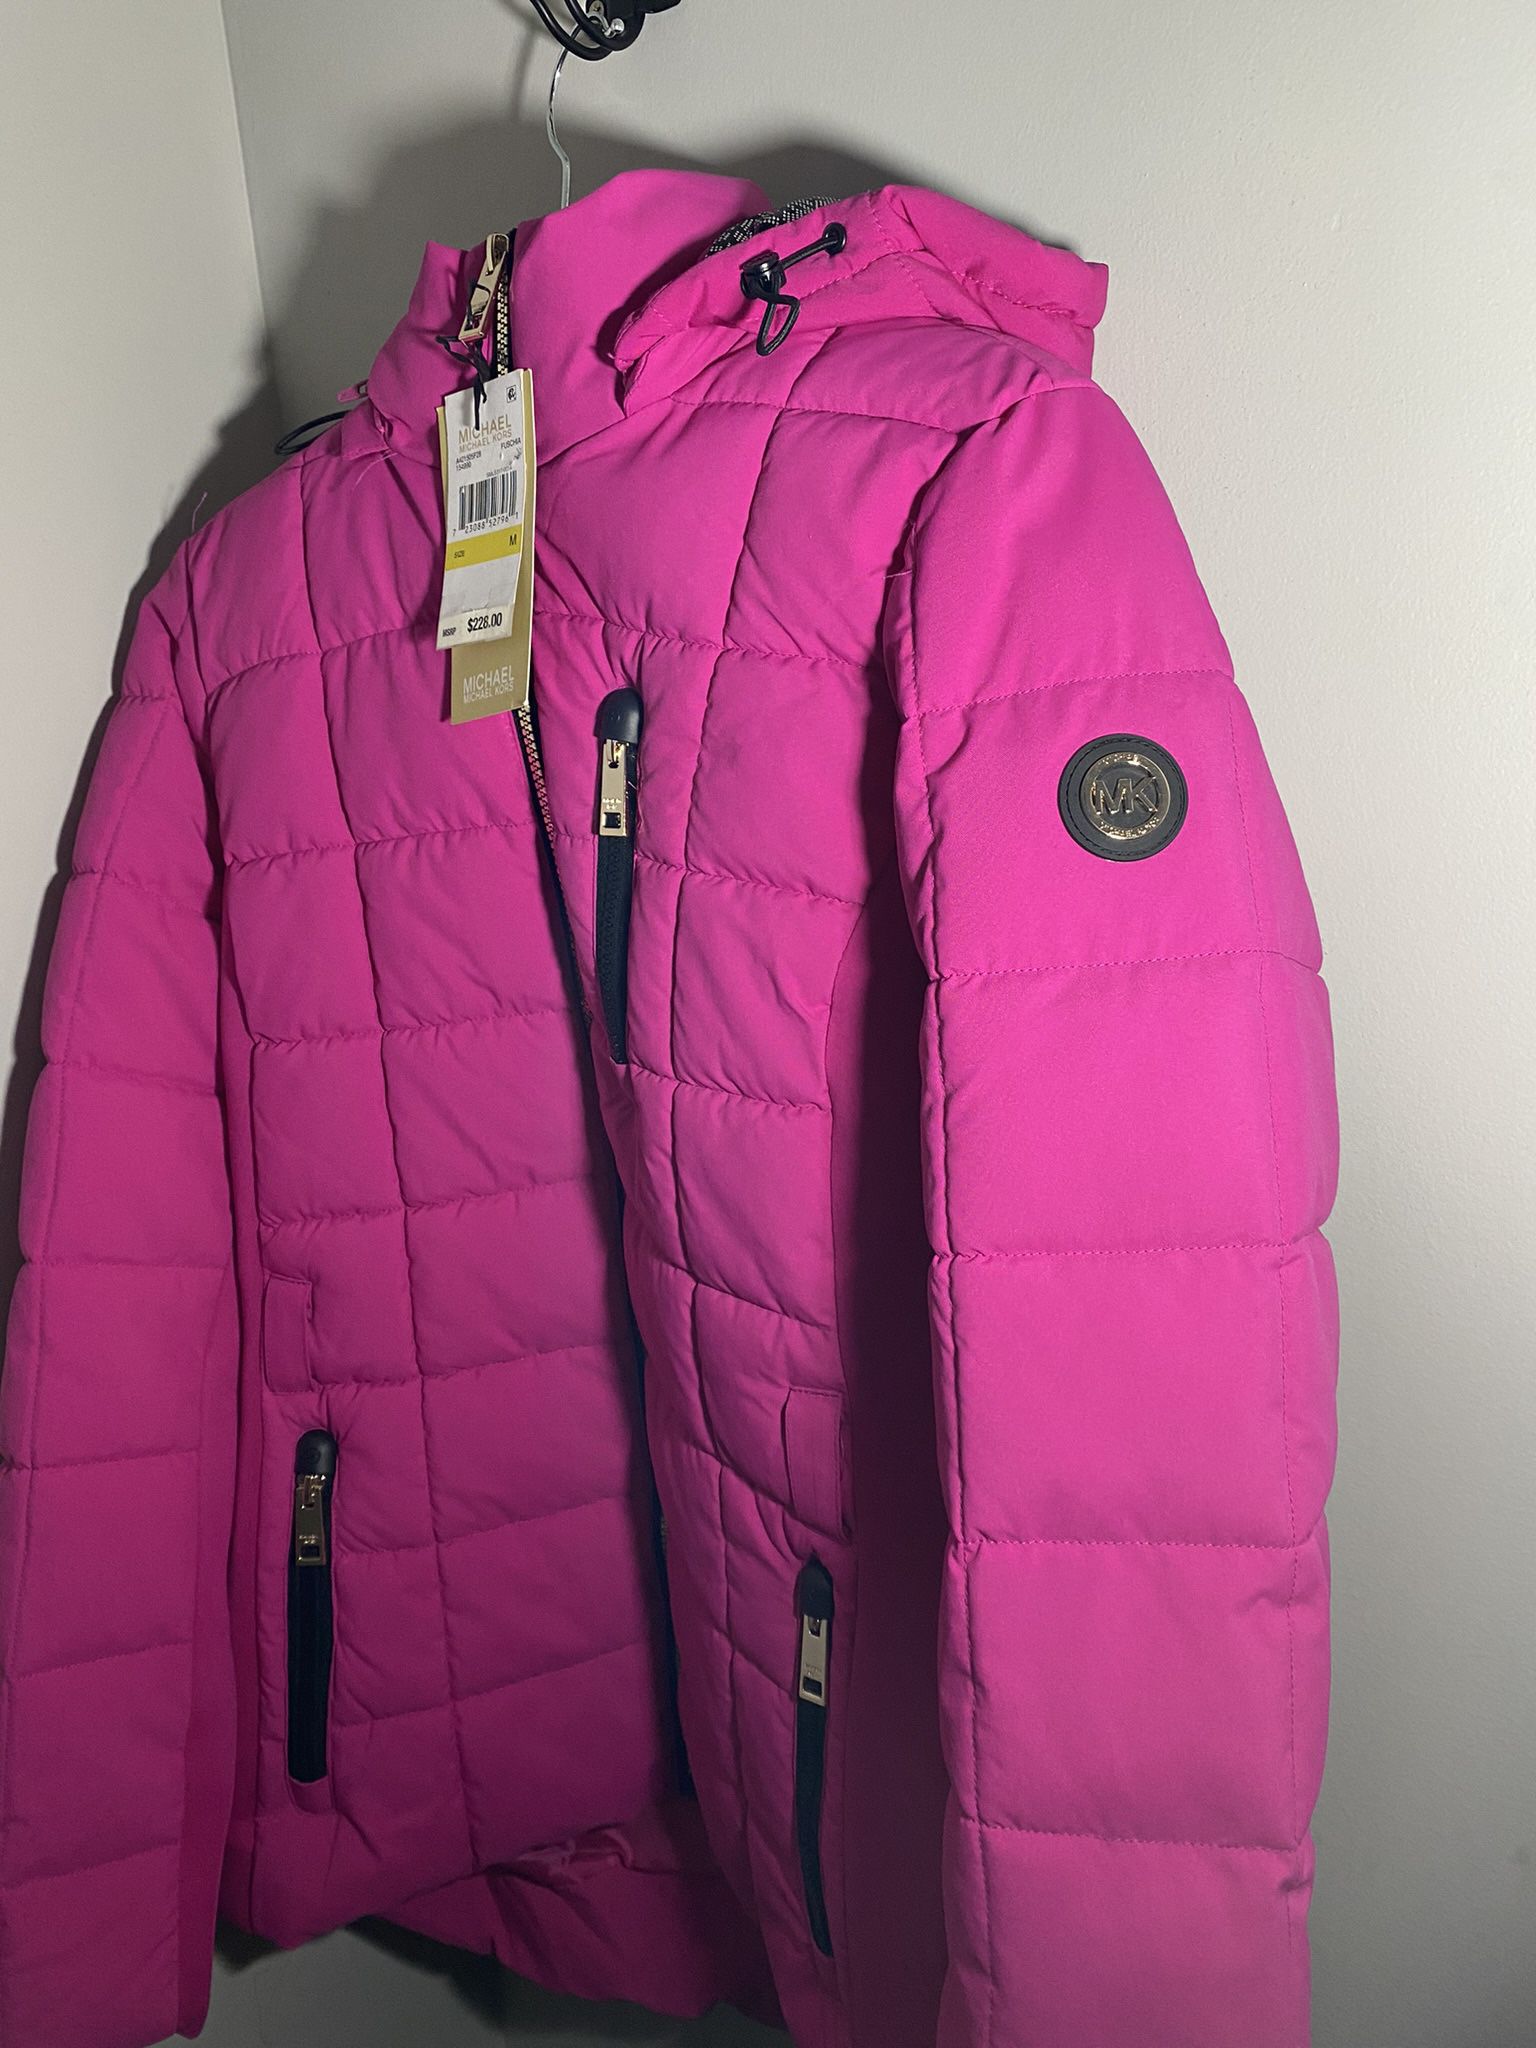 Womens Pink Micheal Kors Jacket (size M)